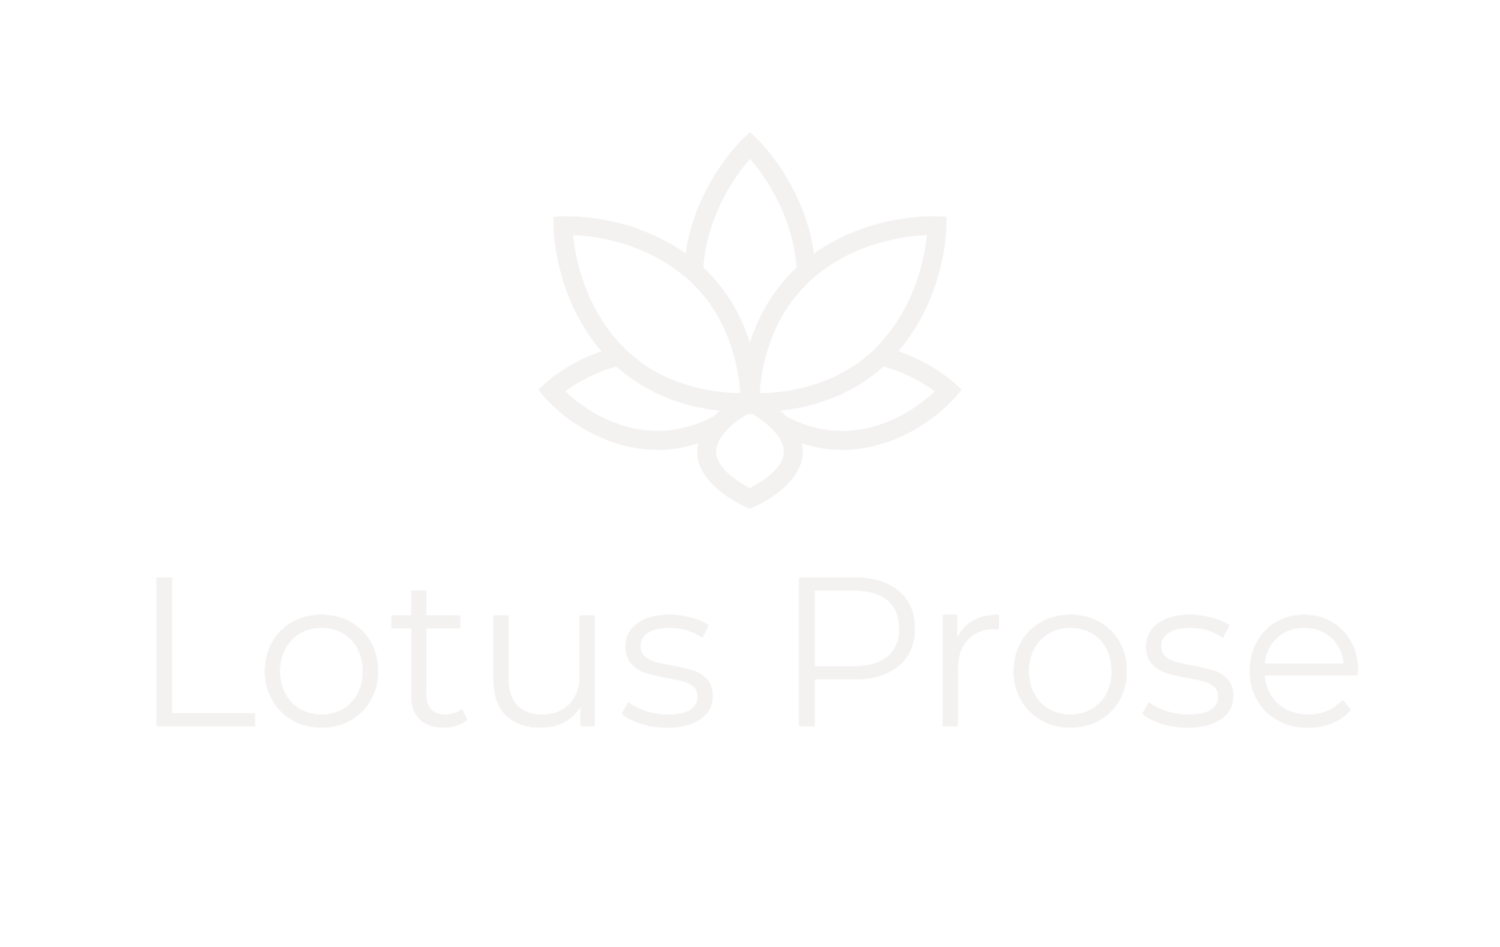 Lotus Prose Editorial Services